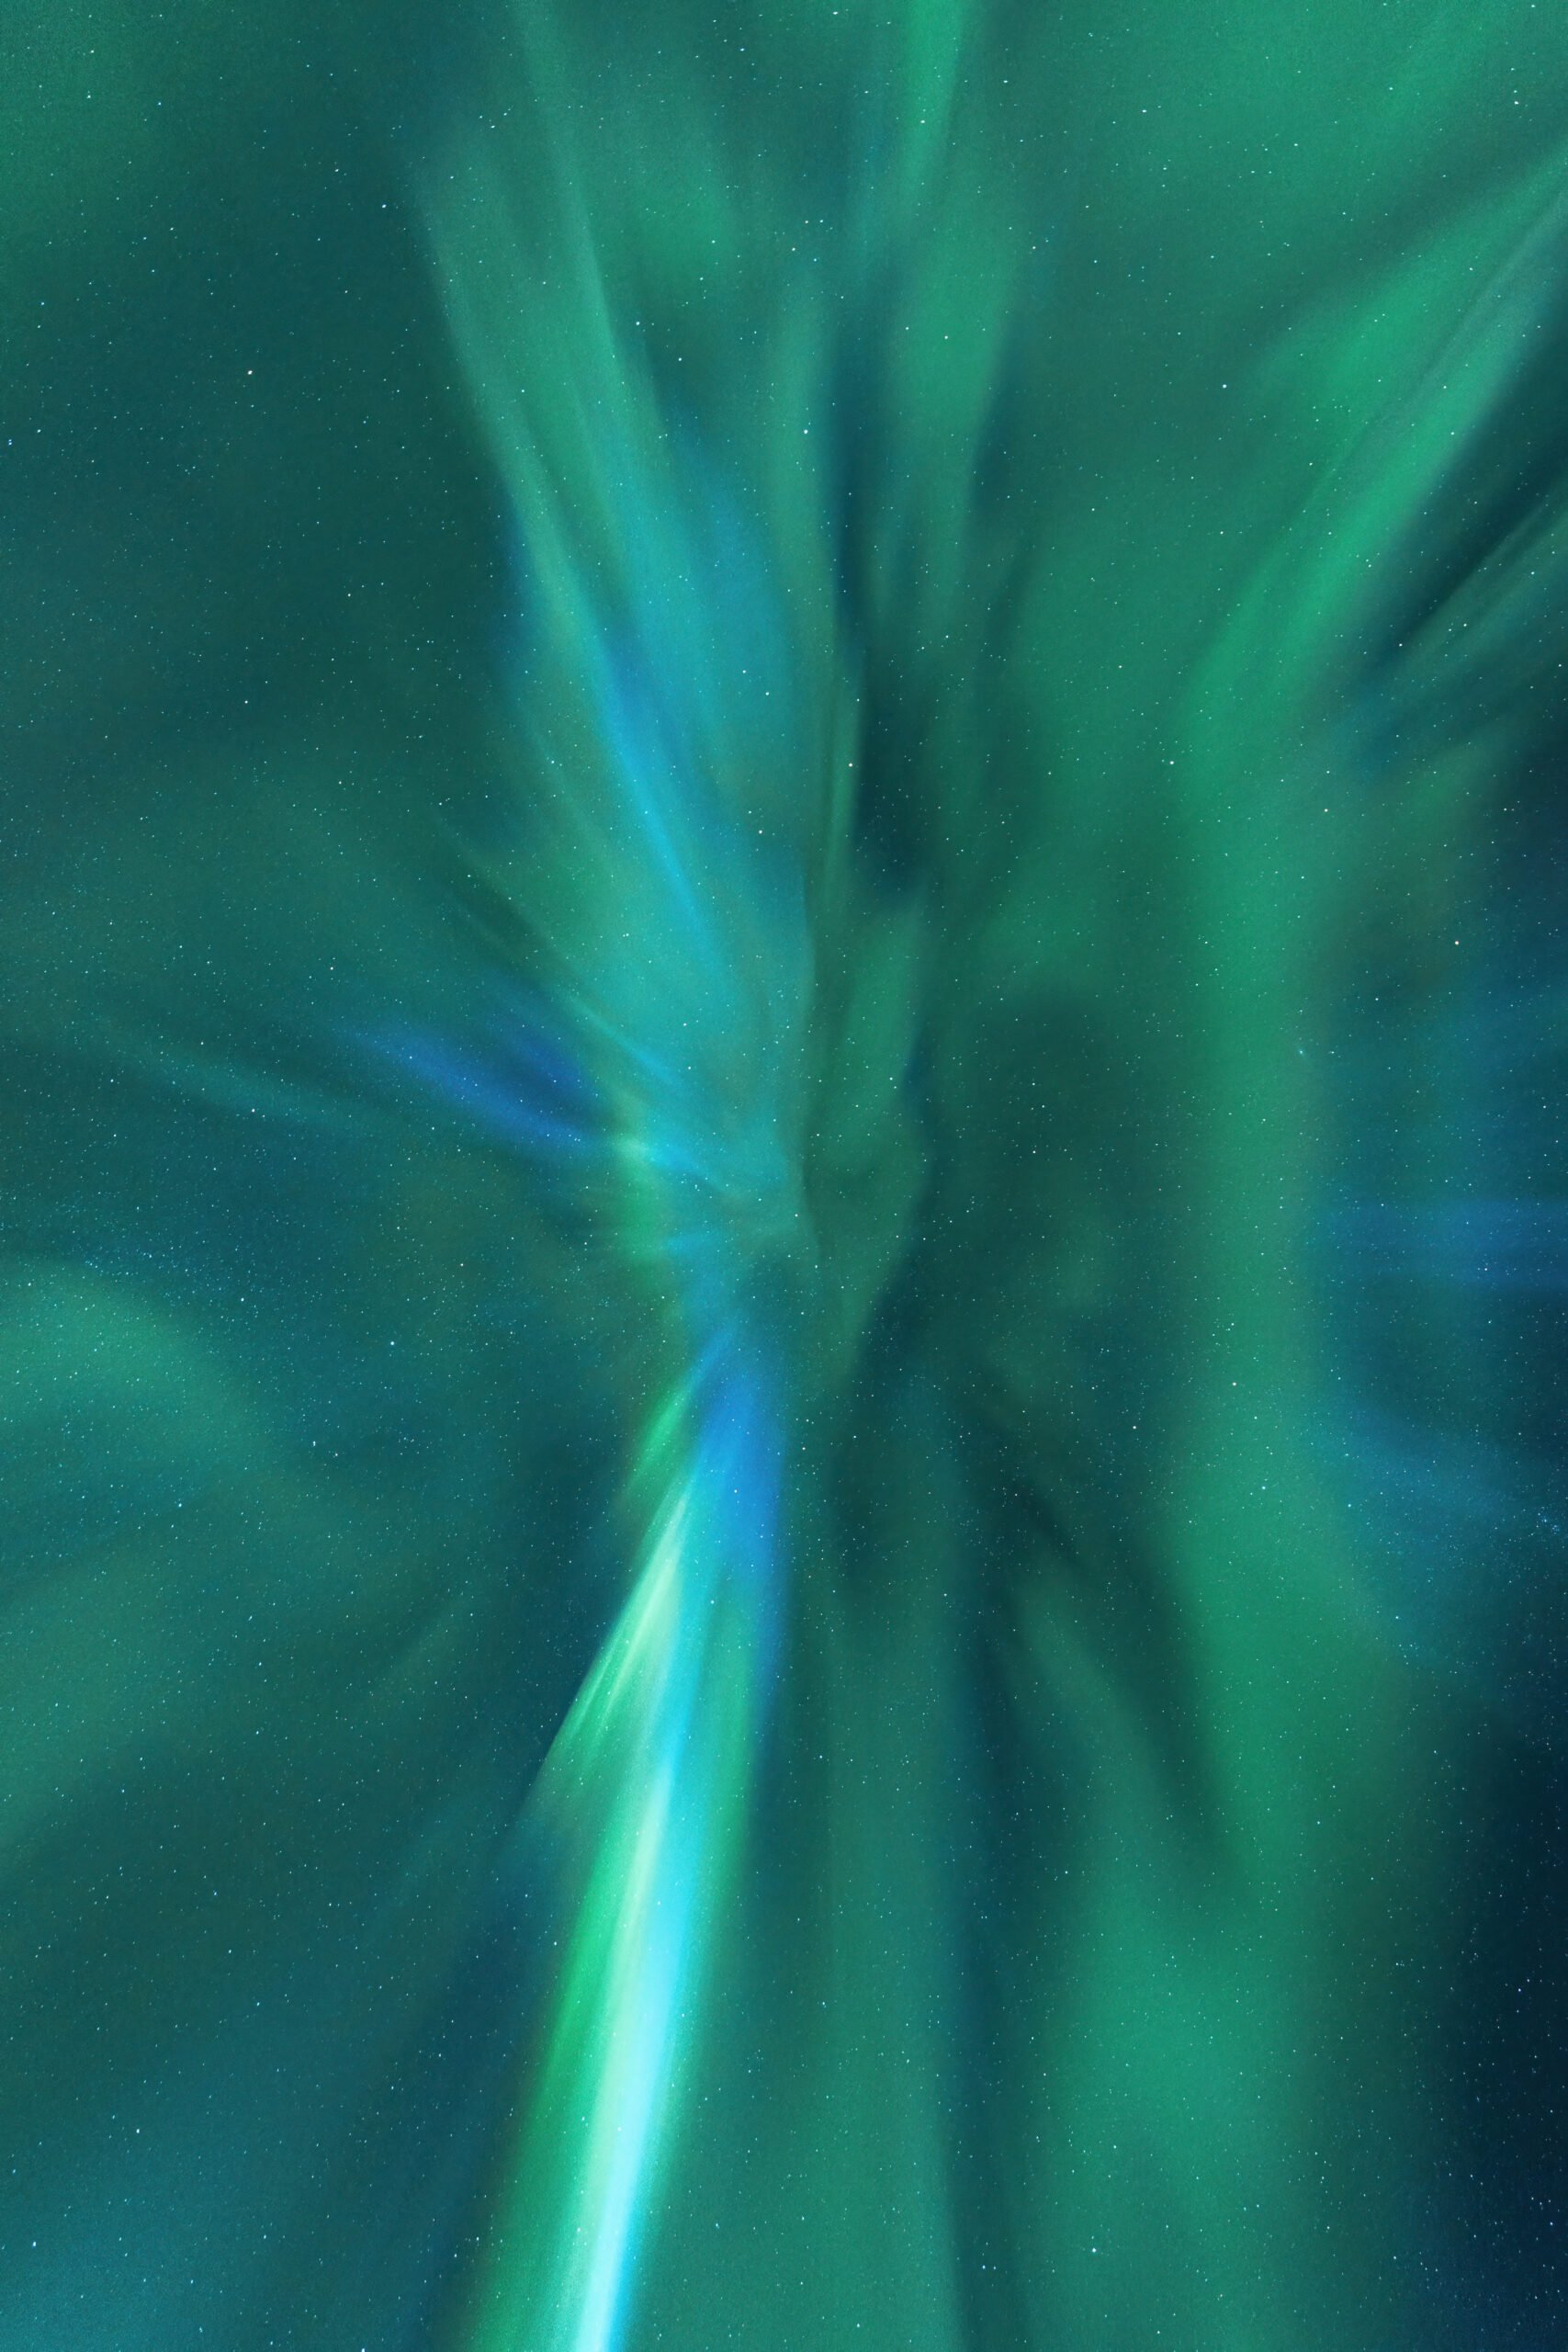 Corona de Aurora Boreal — Islandia